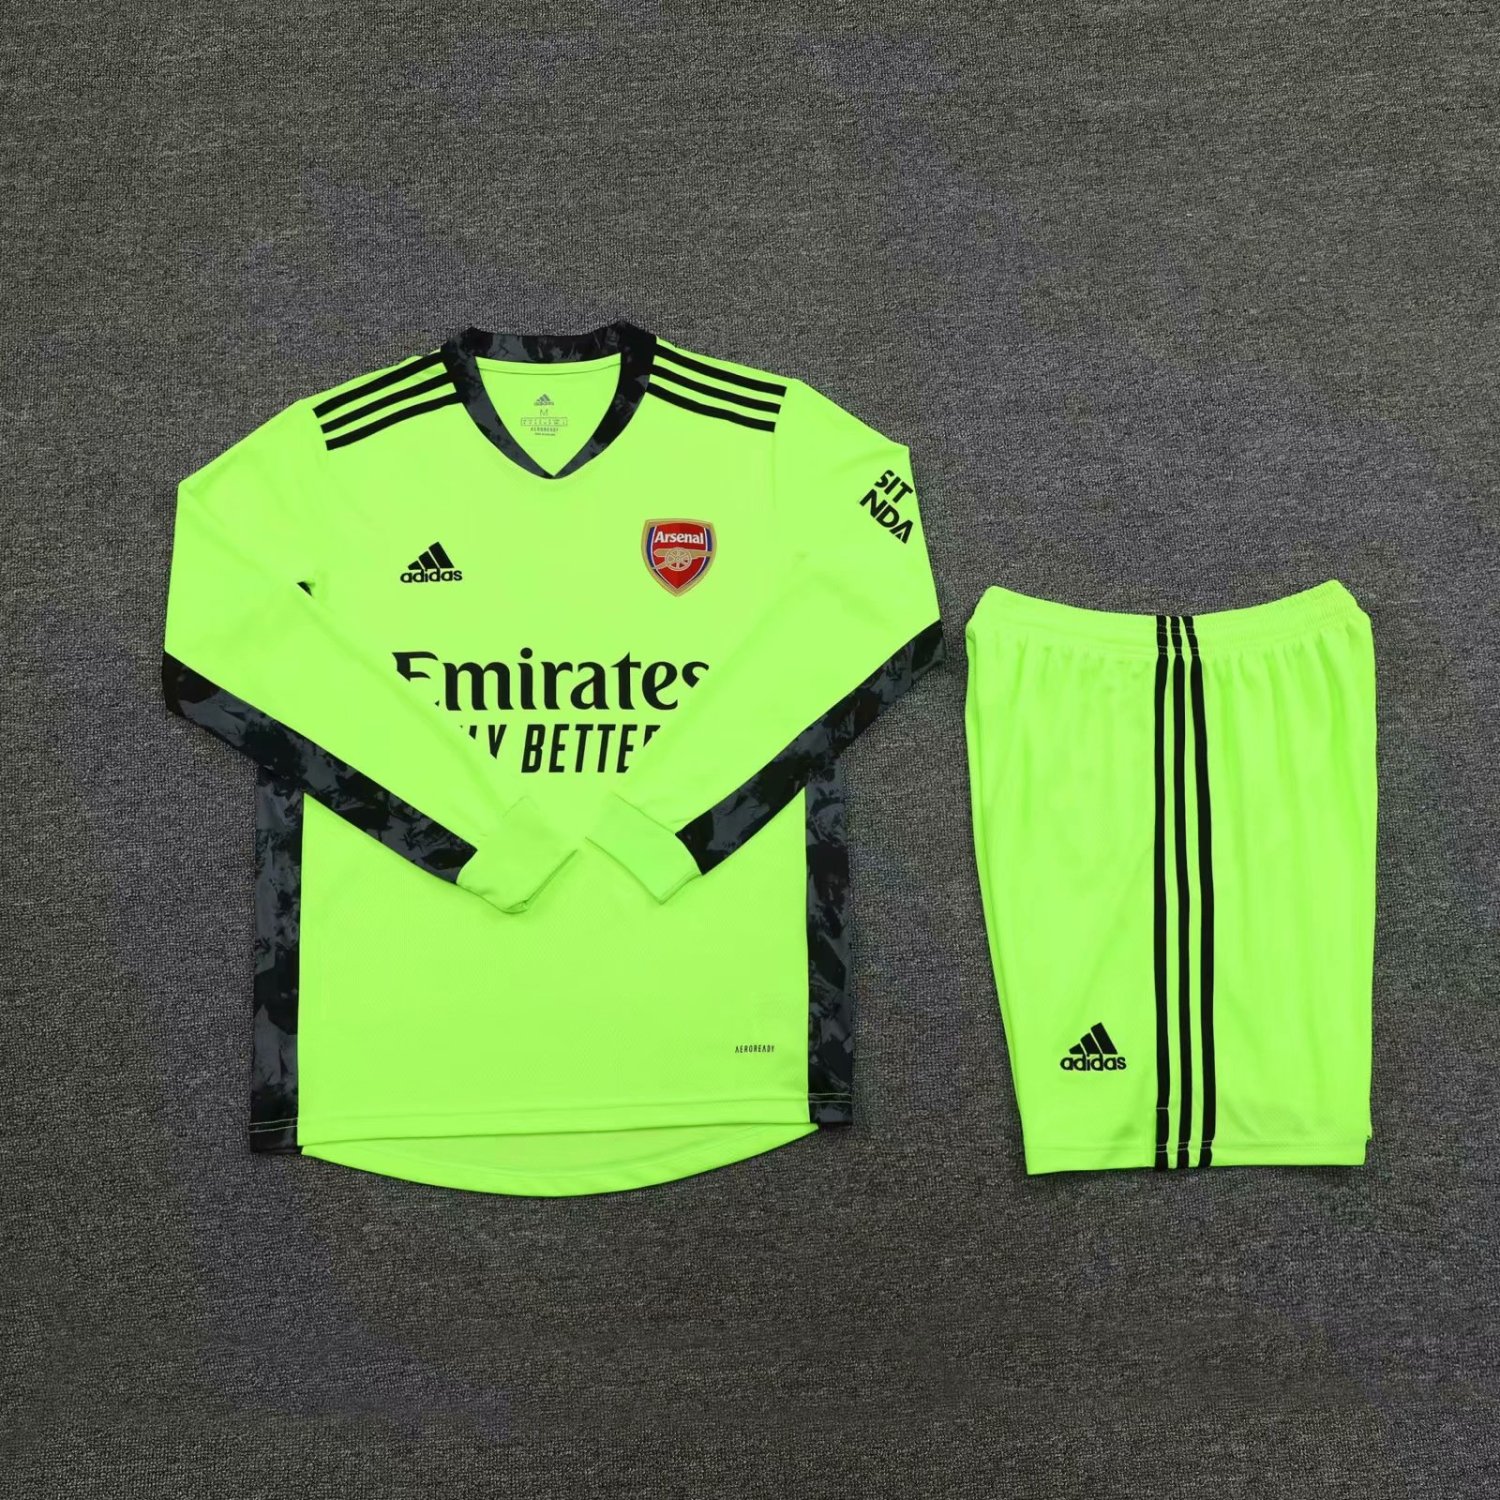 20/21 New Adult Arsenal green club long sleeves soccer kits football ...